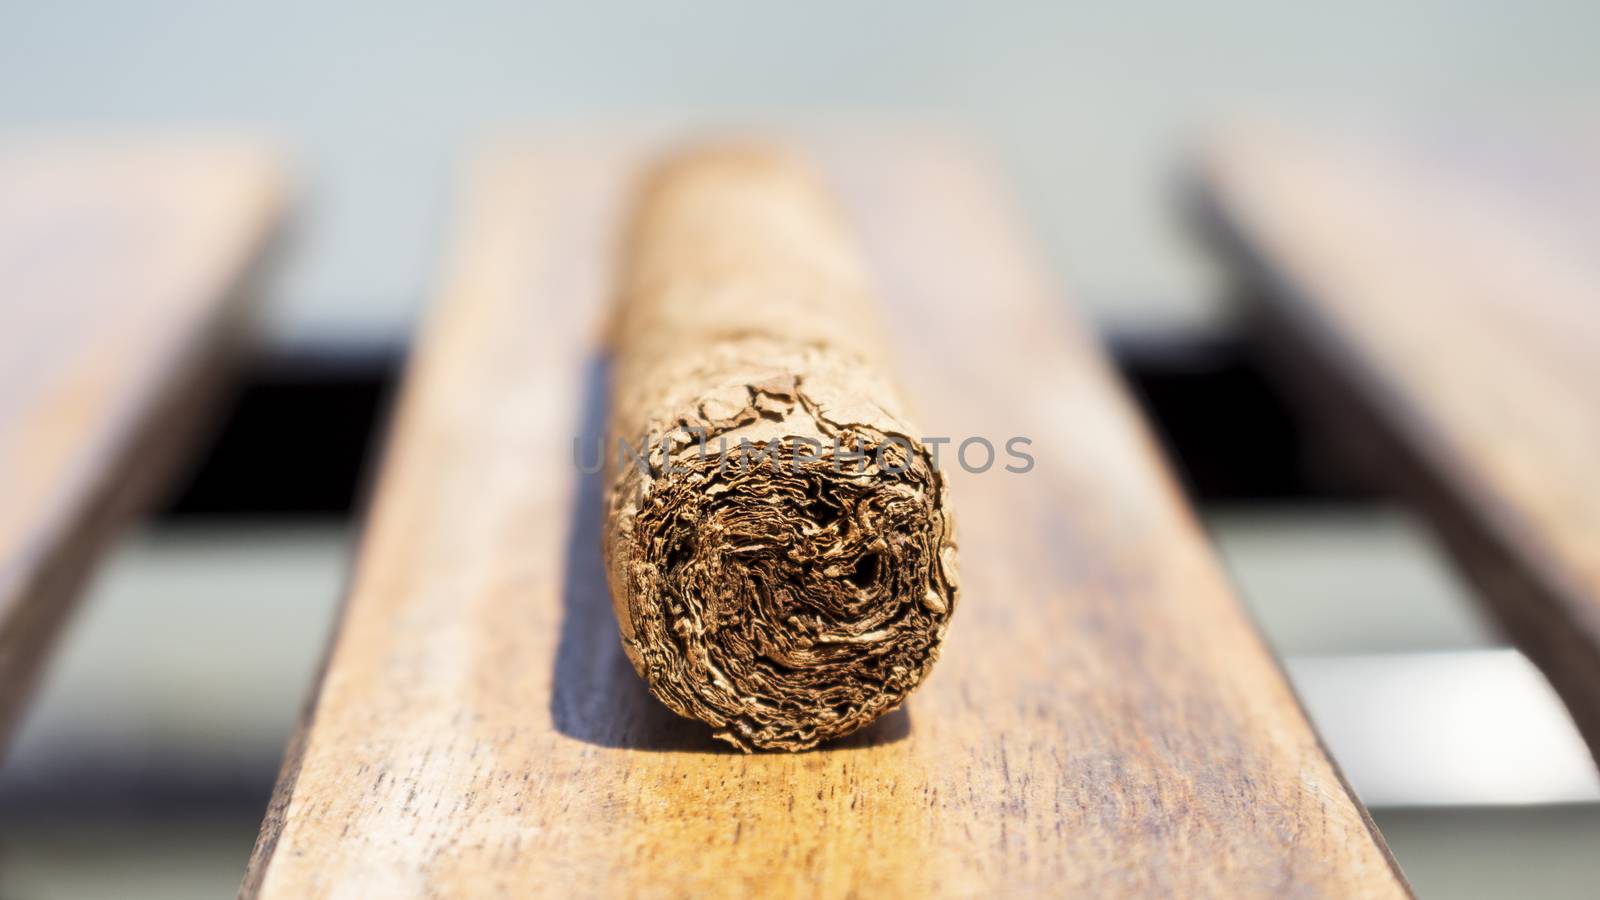 Cuban cigar resting on a wooden surface by alexandarilich